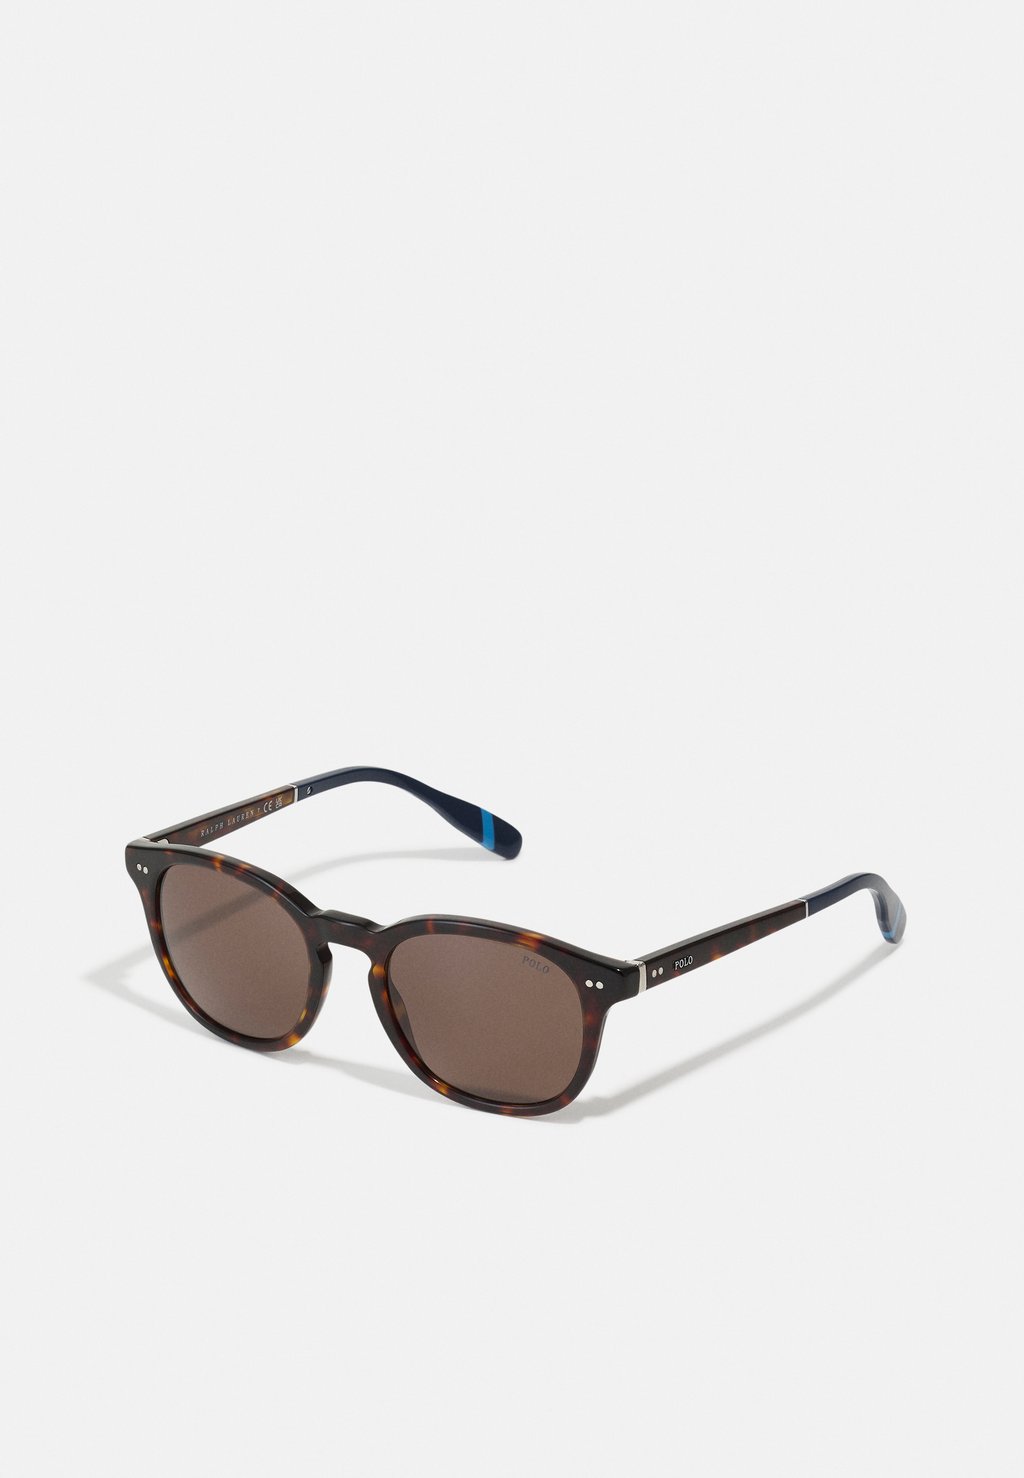 Солнцезащитные очки 0PH4206 Polo Ralph Lauren, блестящие тёмно-гавана